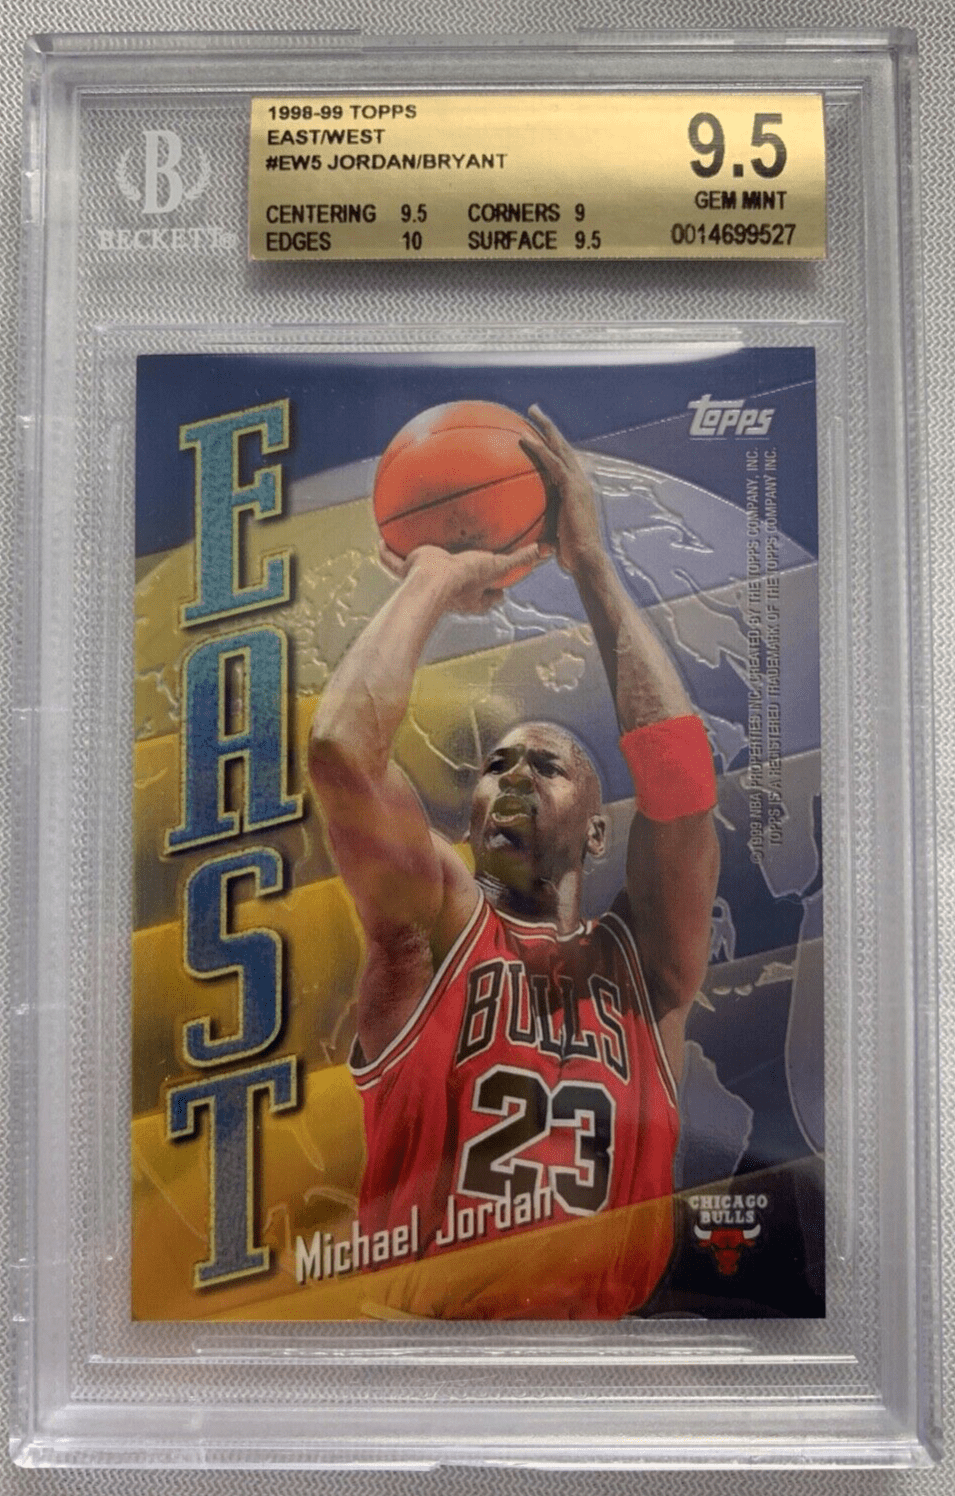 BGS 9.5 Gem Mint 1998 99 Topps Michael Jordan Kobe Bryant East West EW5